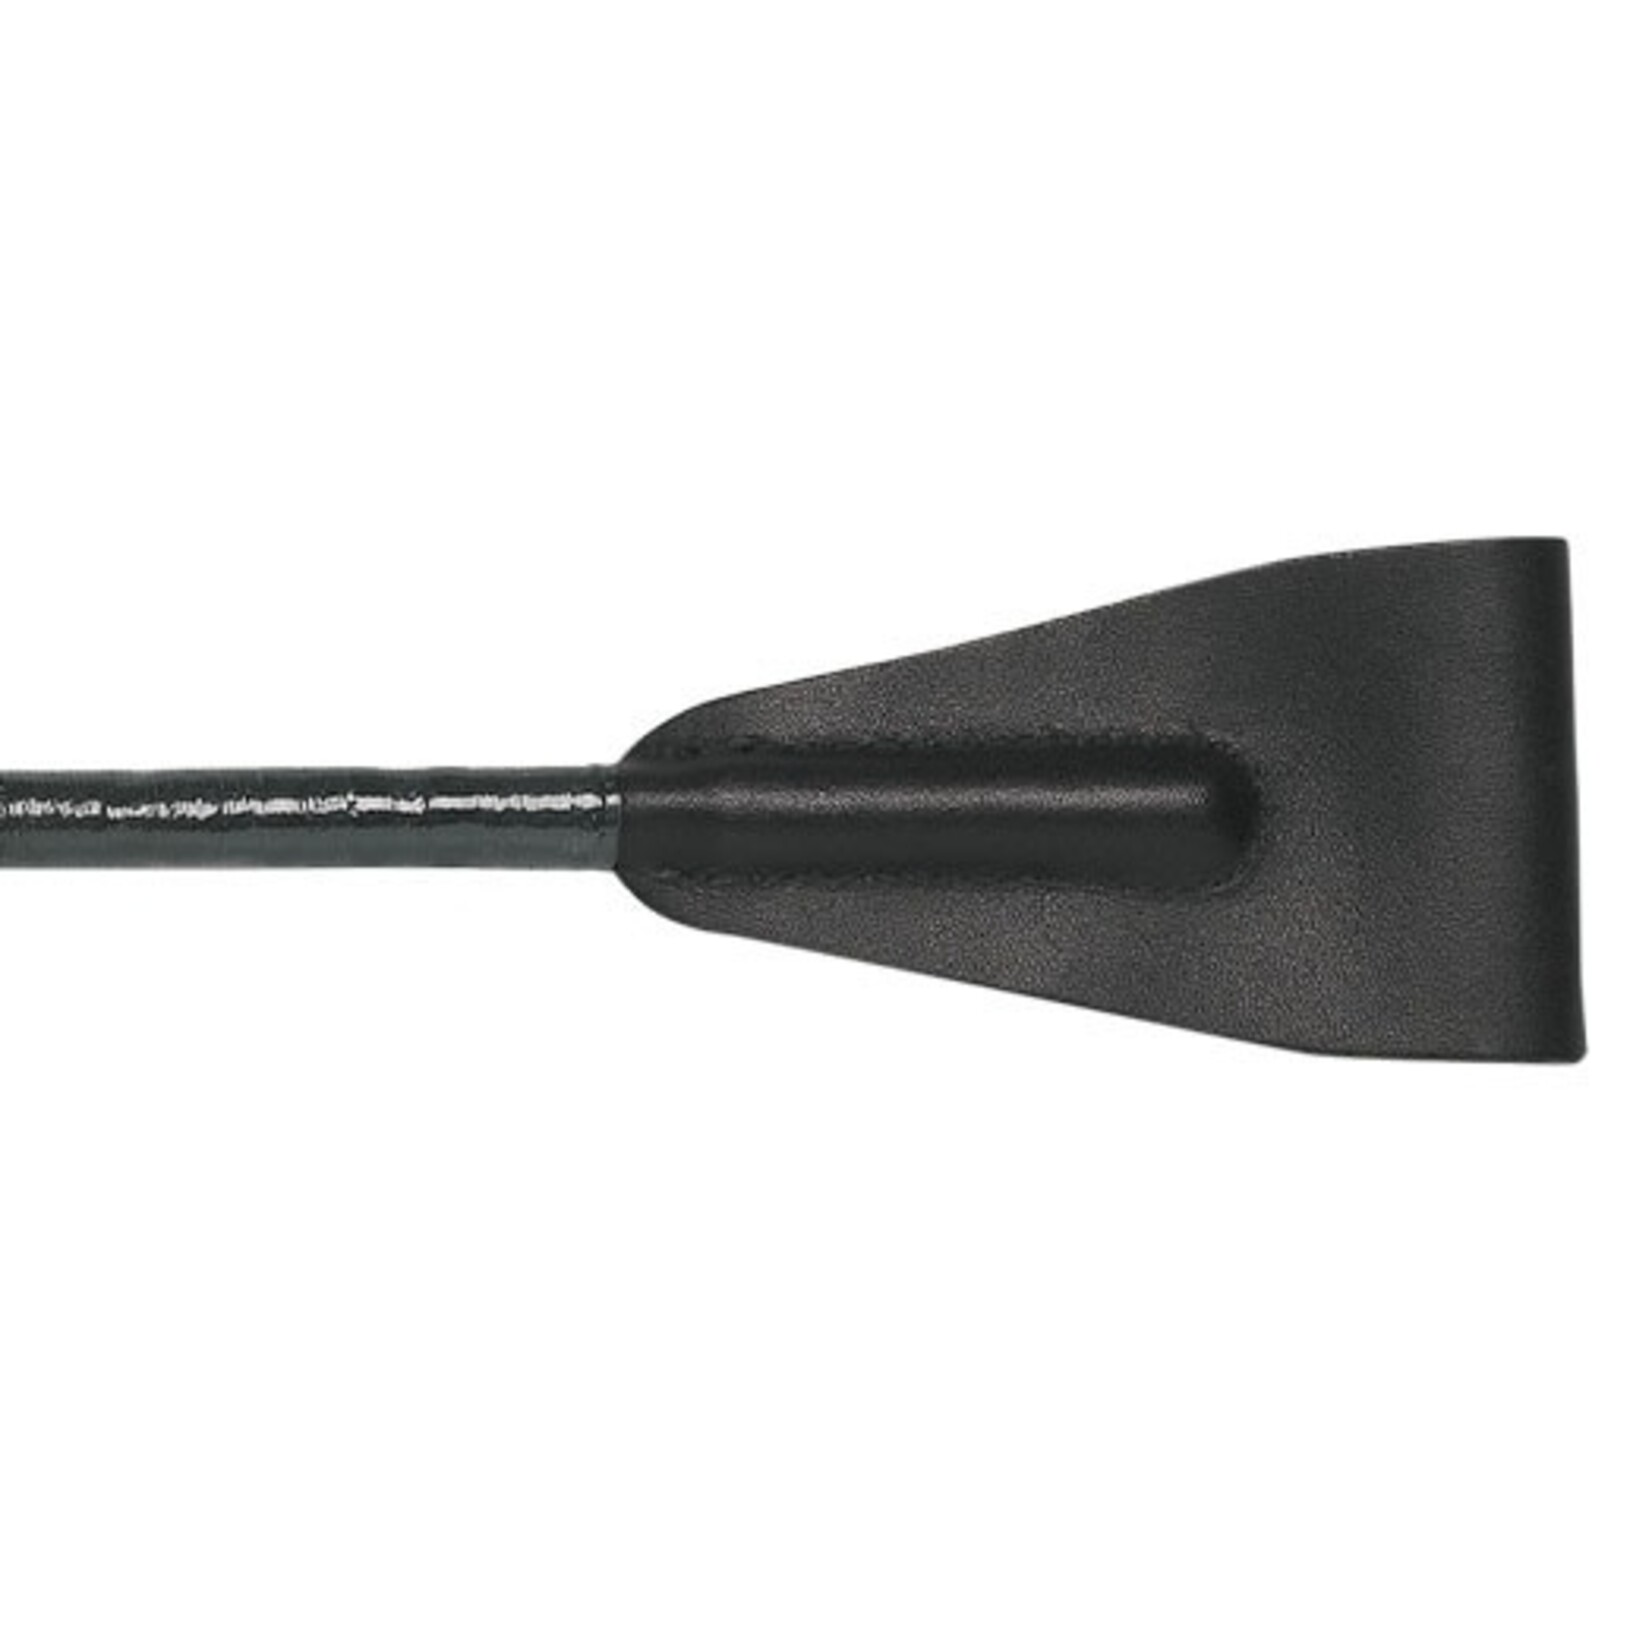 02053 Fleck Leather Handle Bat with Nickel Cap